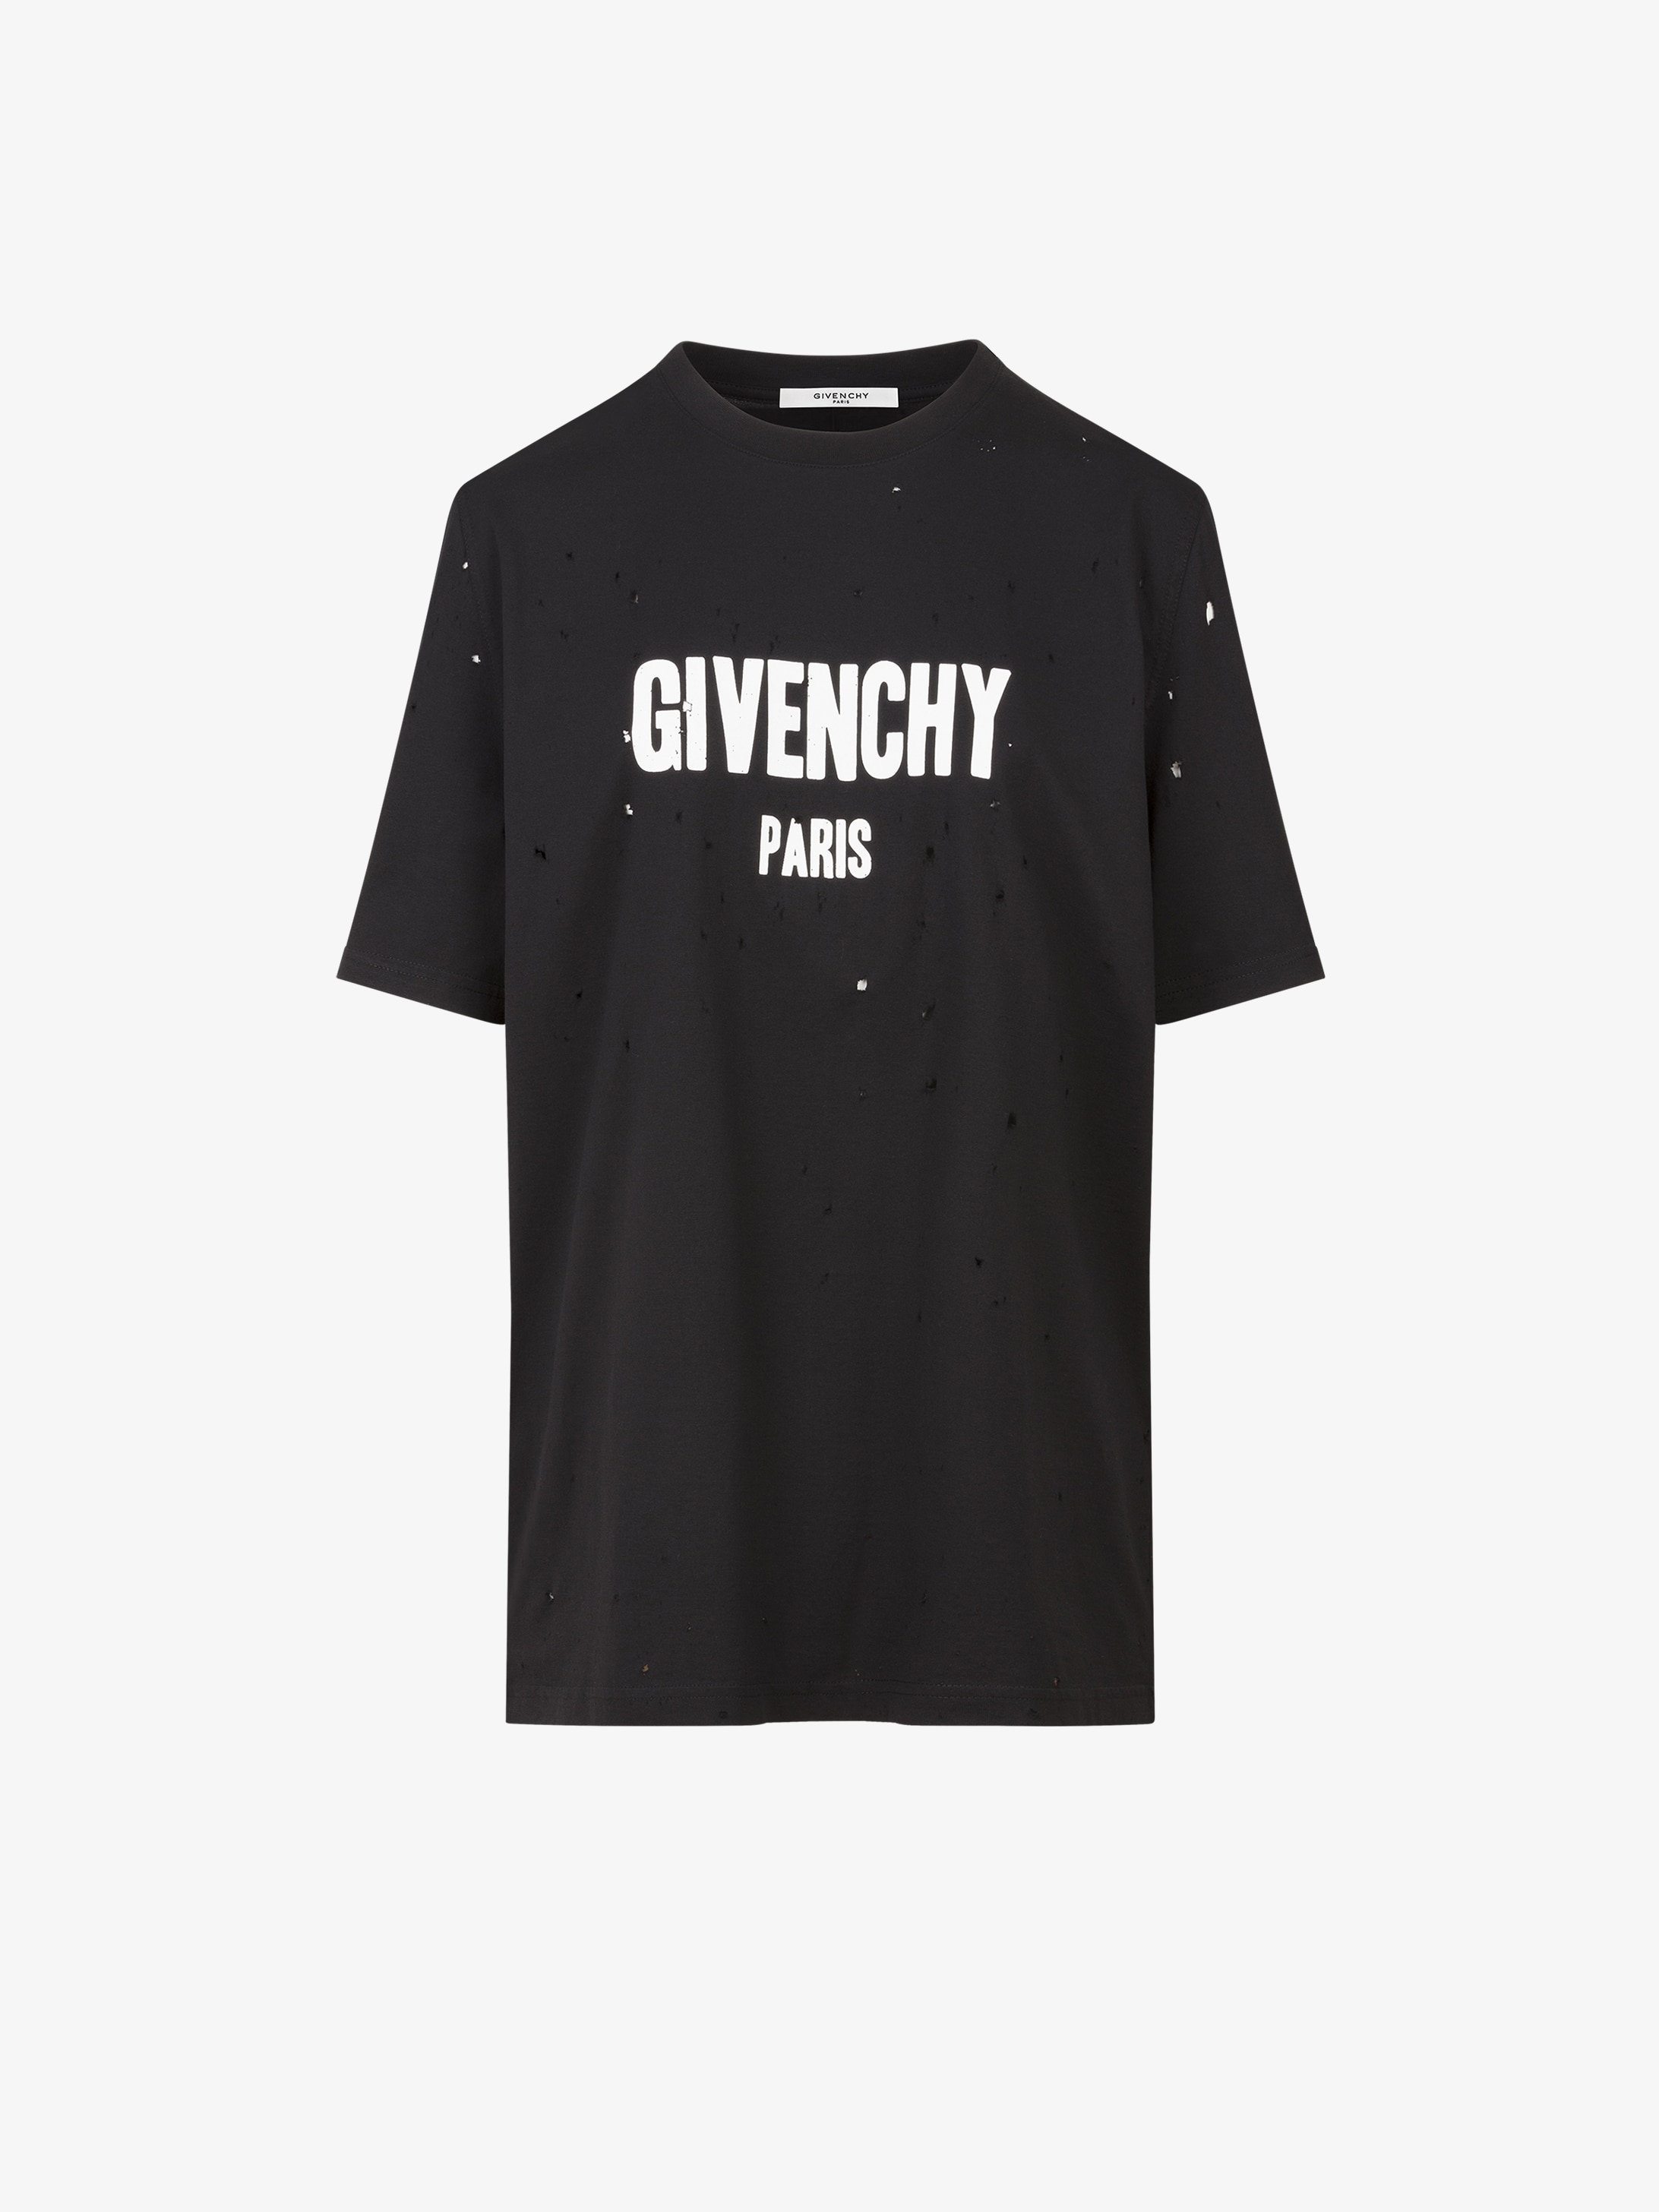 Givenchy t shirt and shorts amazon yandy